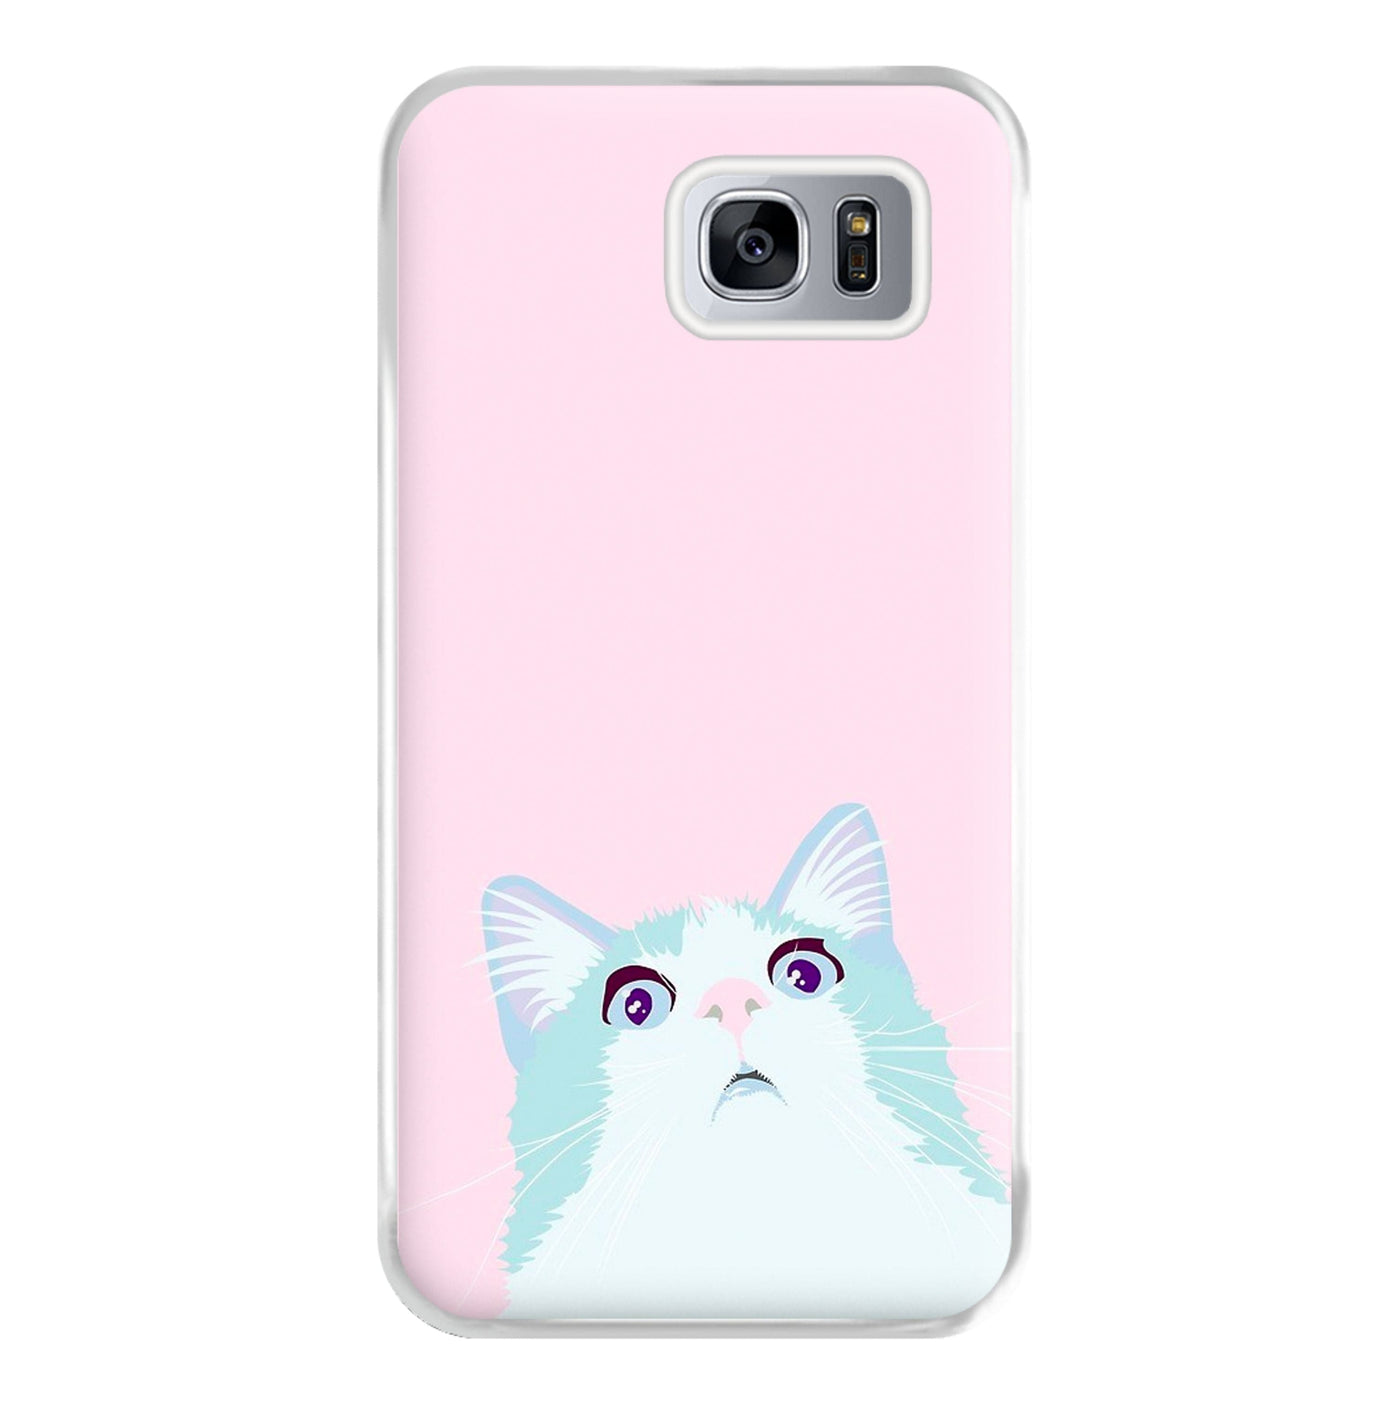 Curious Cat Phone Case